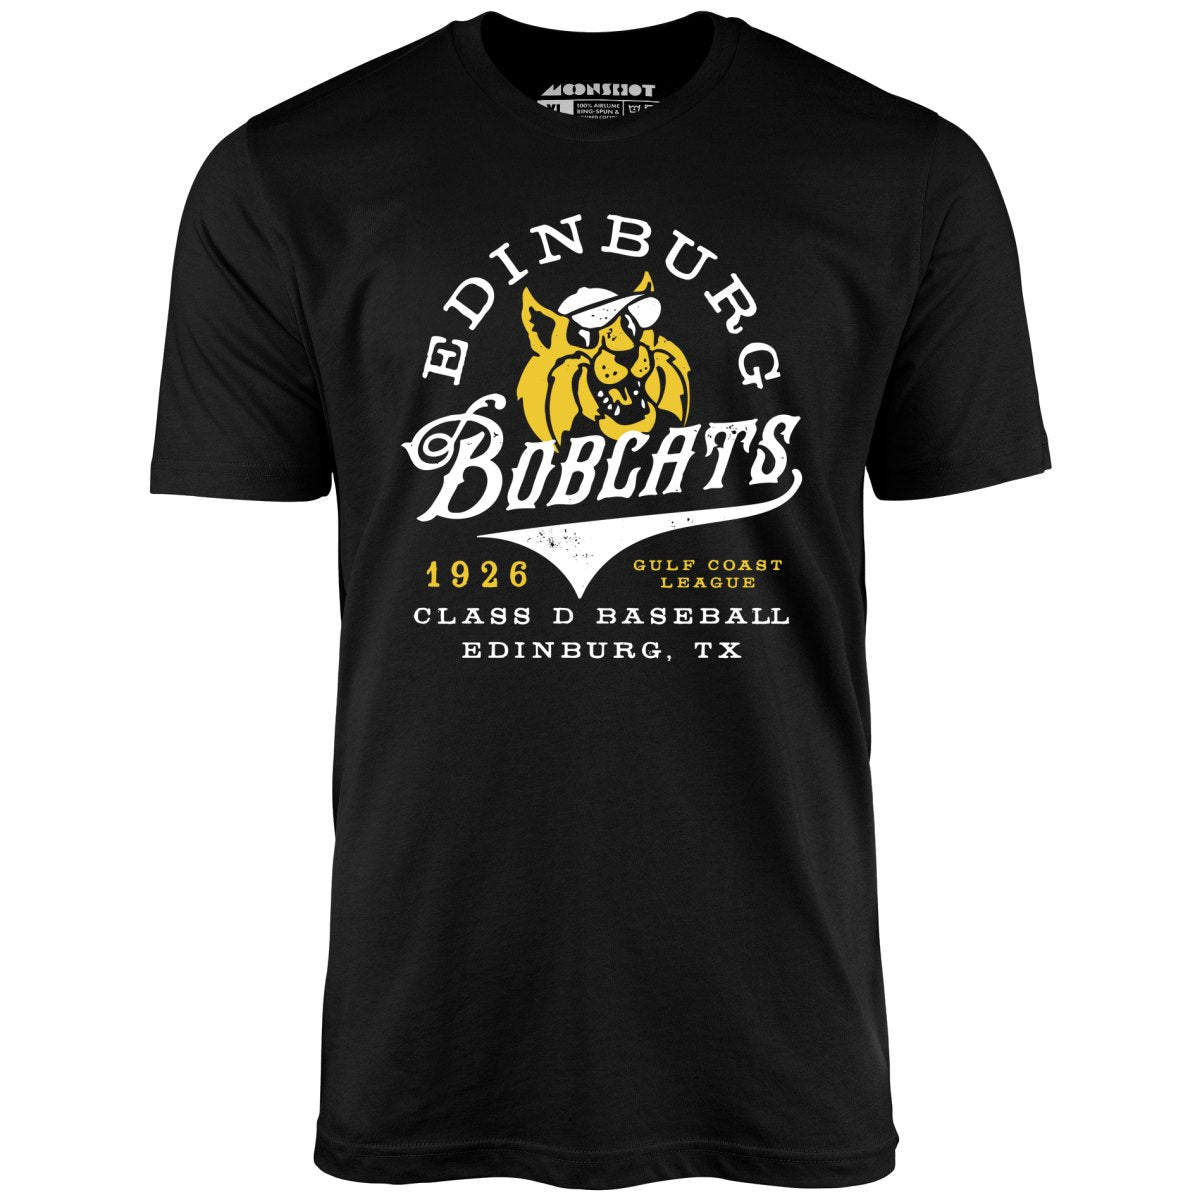 Edinburg Bobcats - Texas - Vintage Defunct Baseball Teams - Unisex T-Shirt